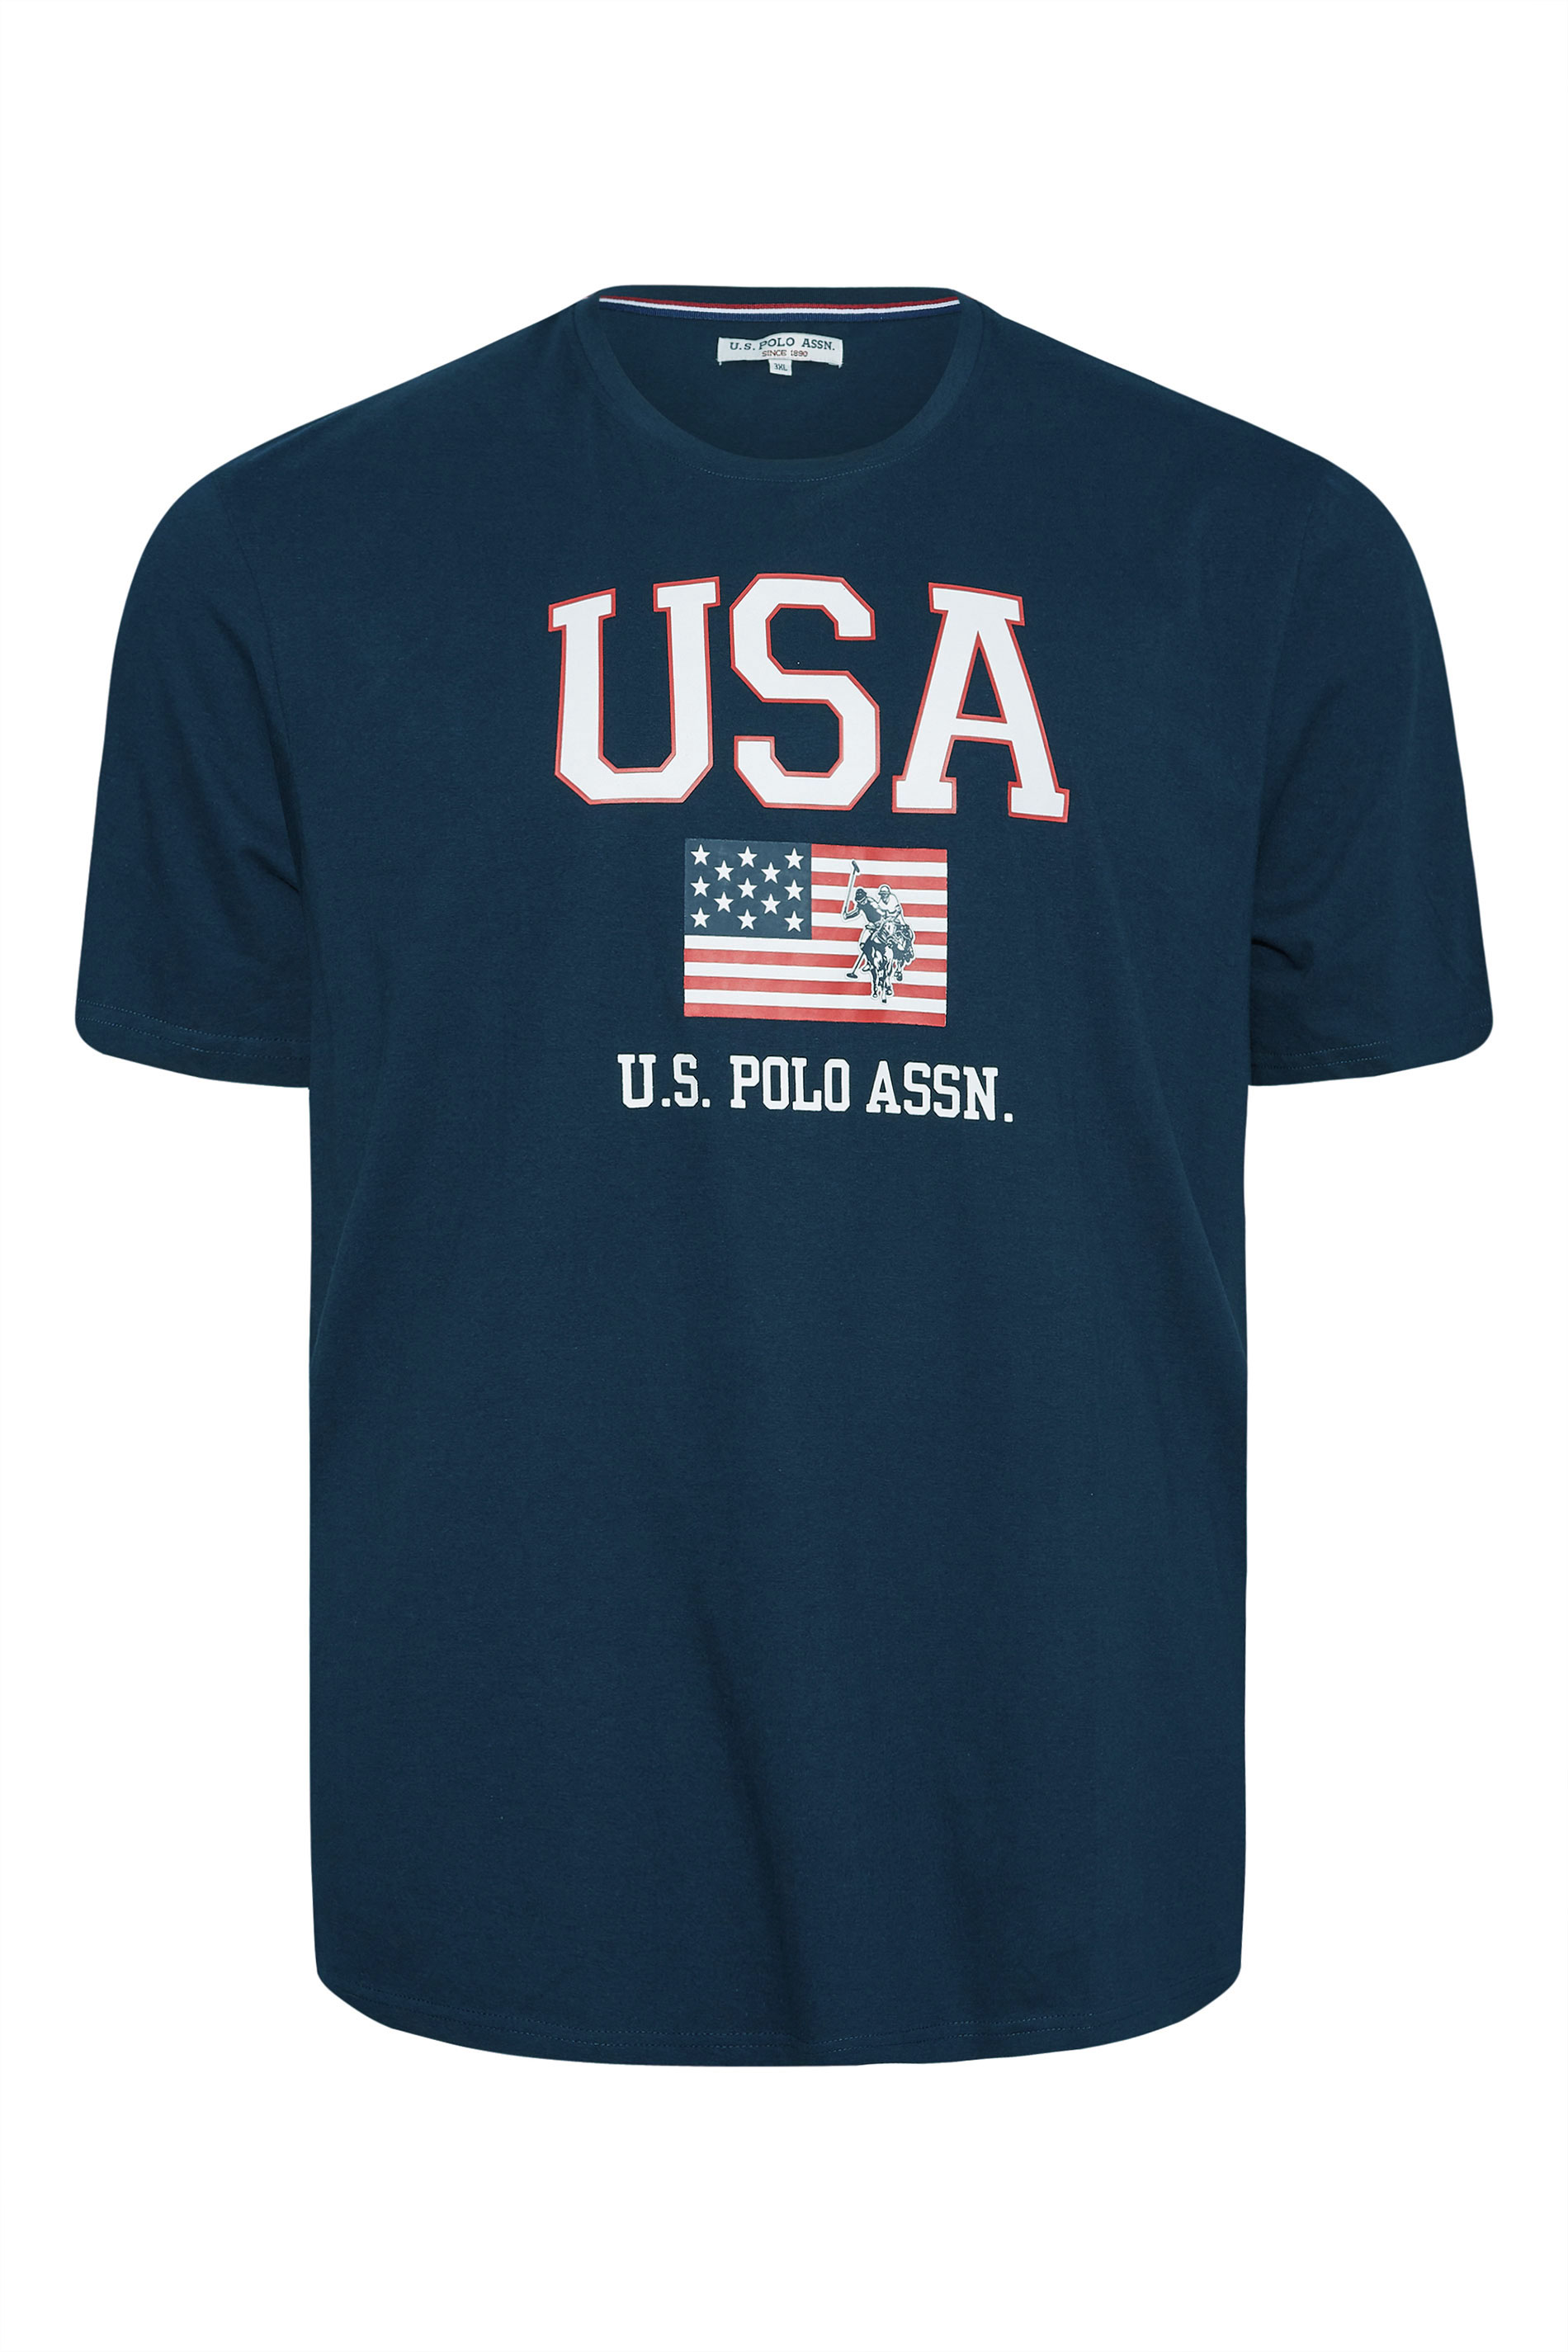 U.S. POLO ASSN. Navy Blue USA Print T-Shirt | BadRhino 3